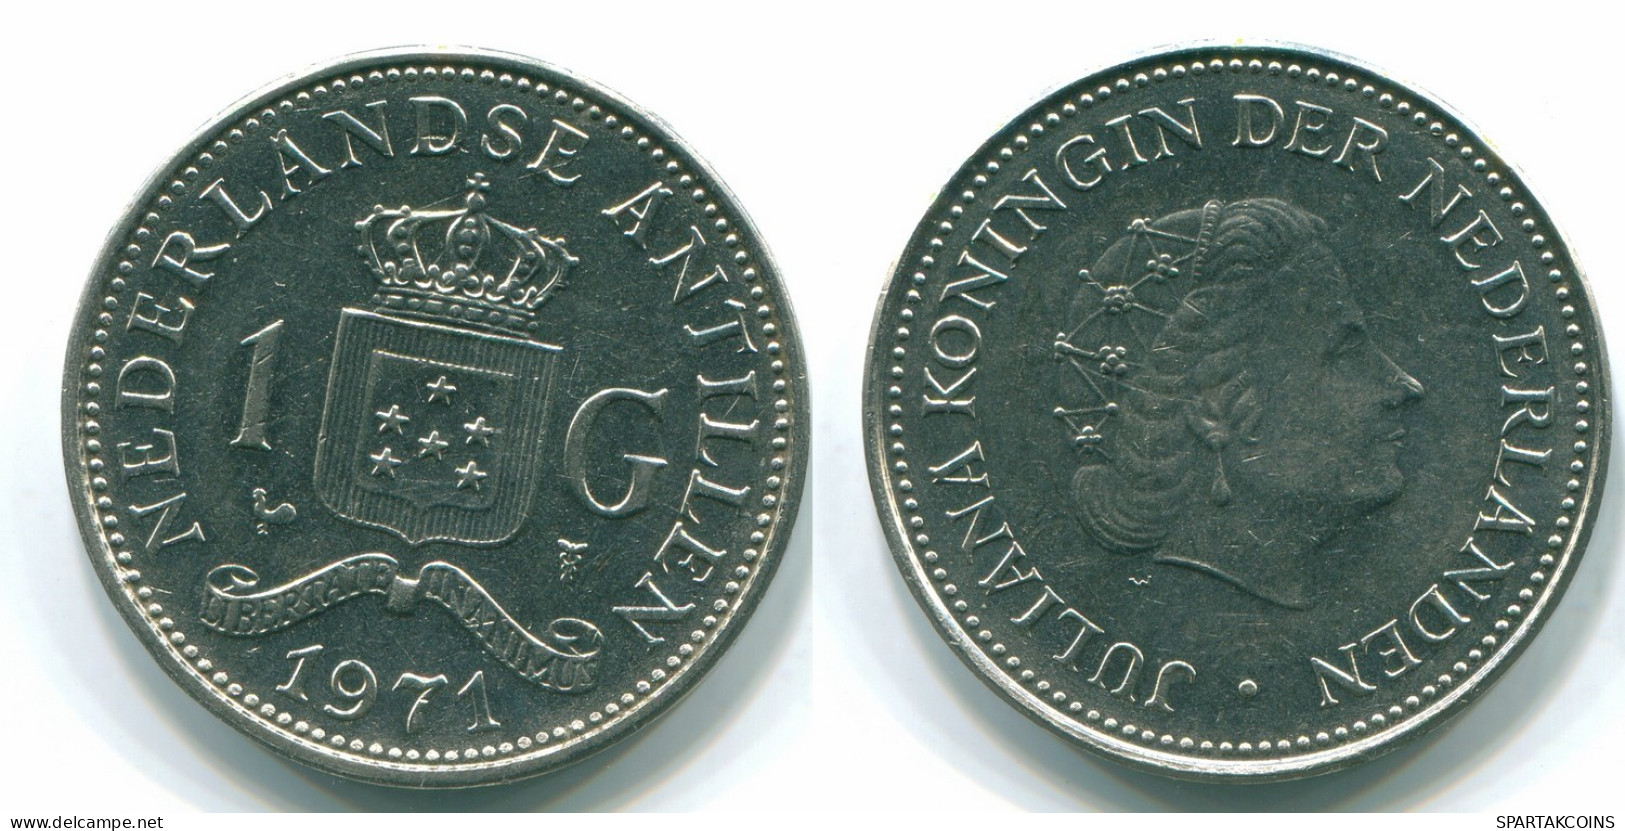 1 GULDEN 1971 NETHERLANDS ANTILLES Nickel Colonial Coin #S11938.U.A - Antille Olandesi